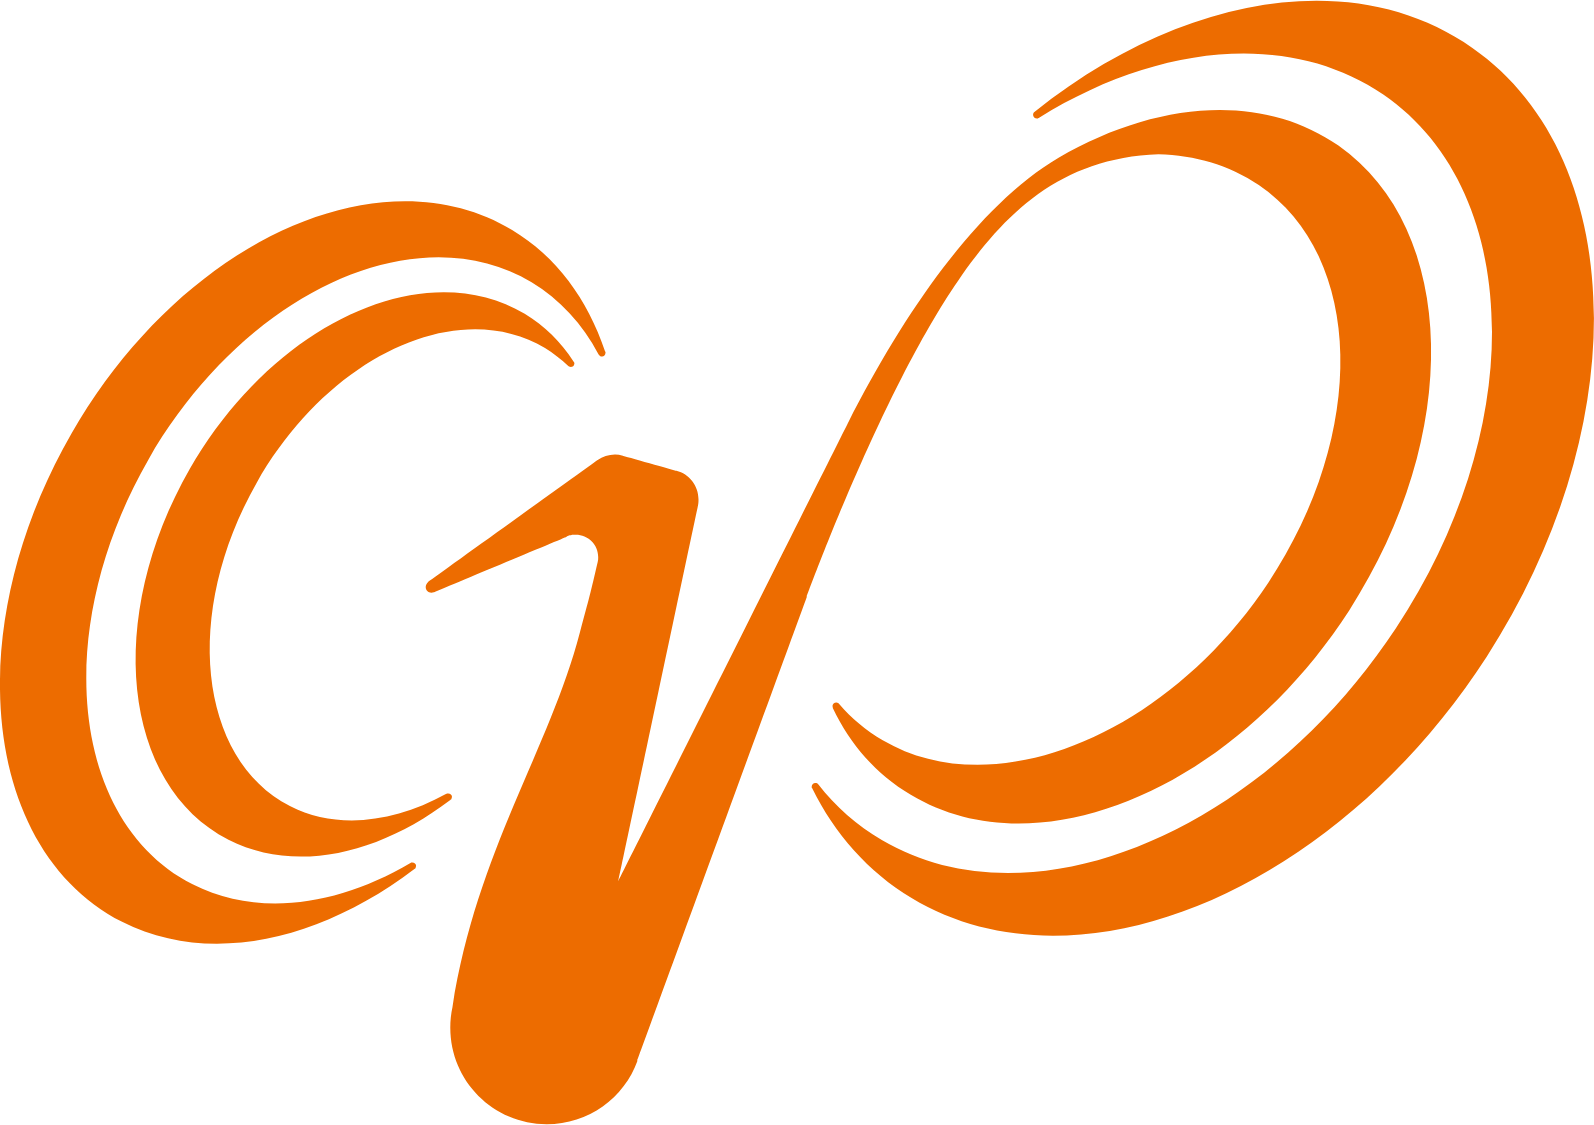 CGN Mining Company logo (PNG transparent)